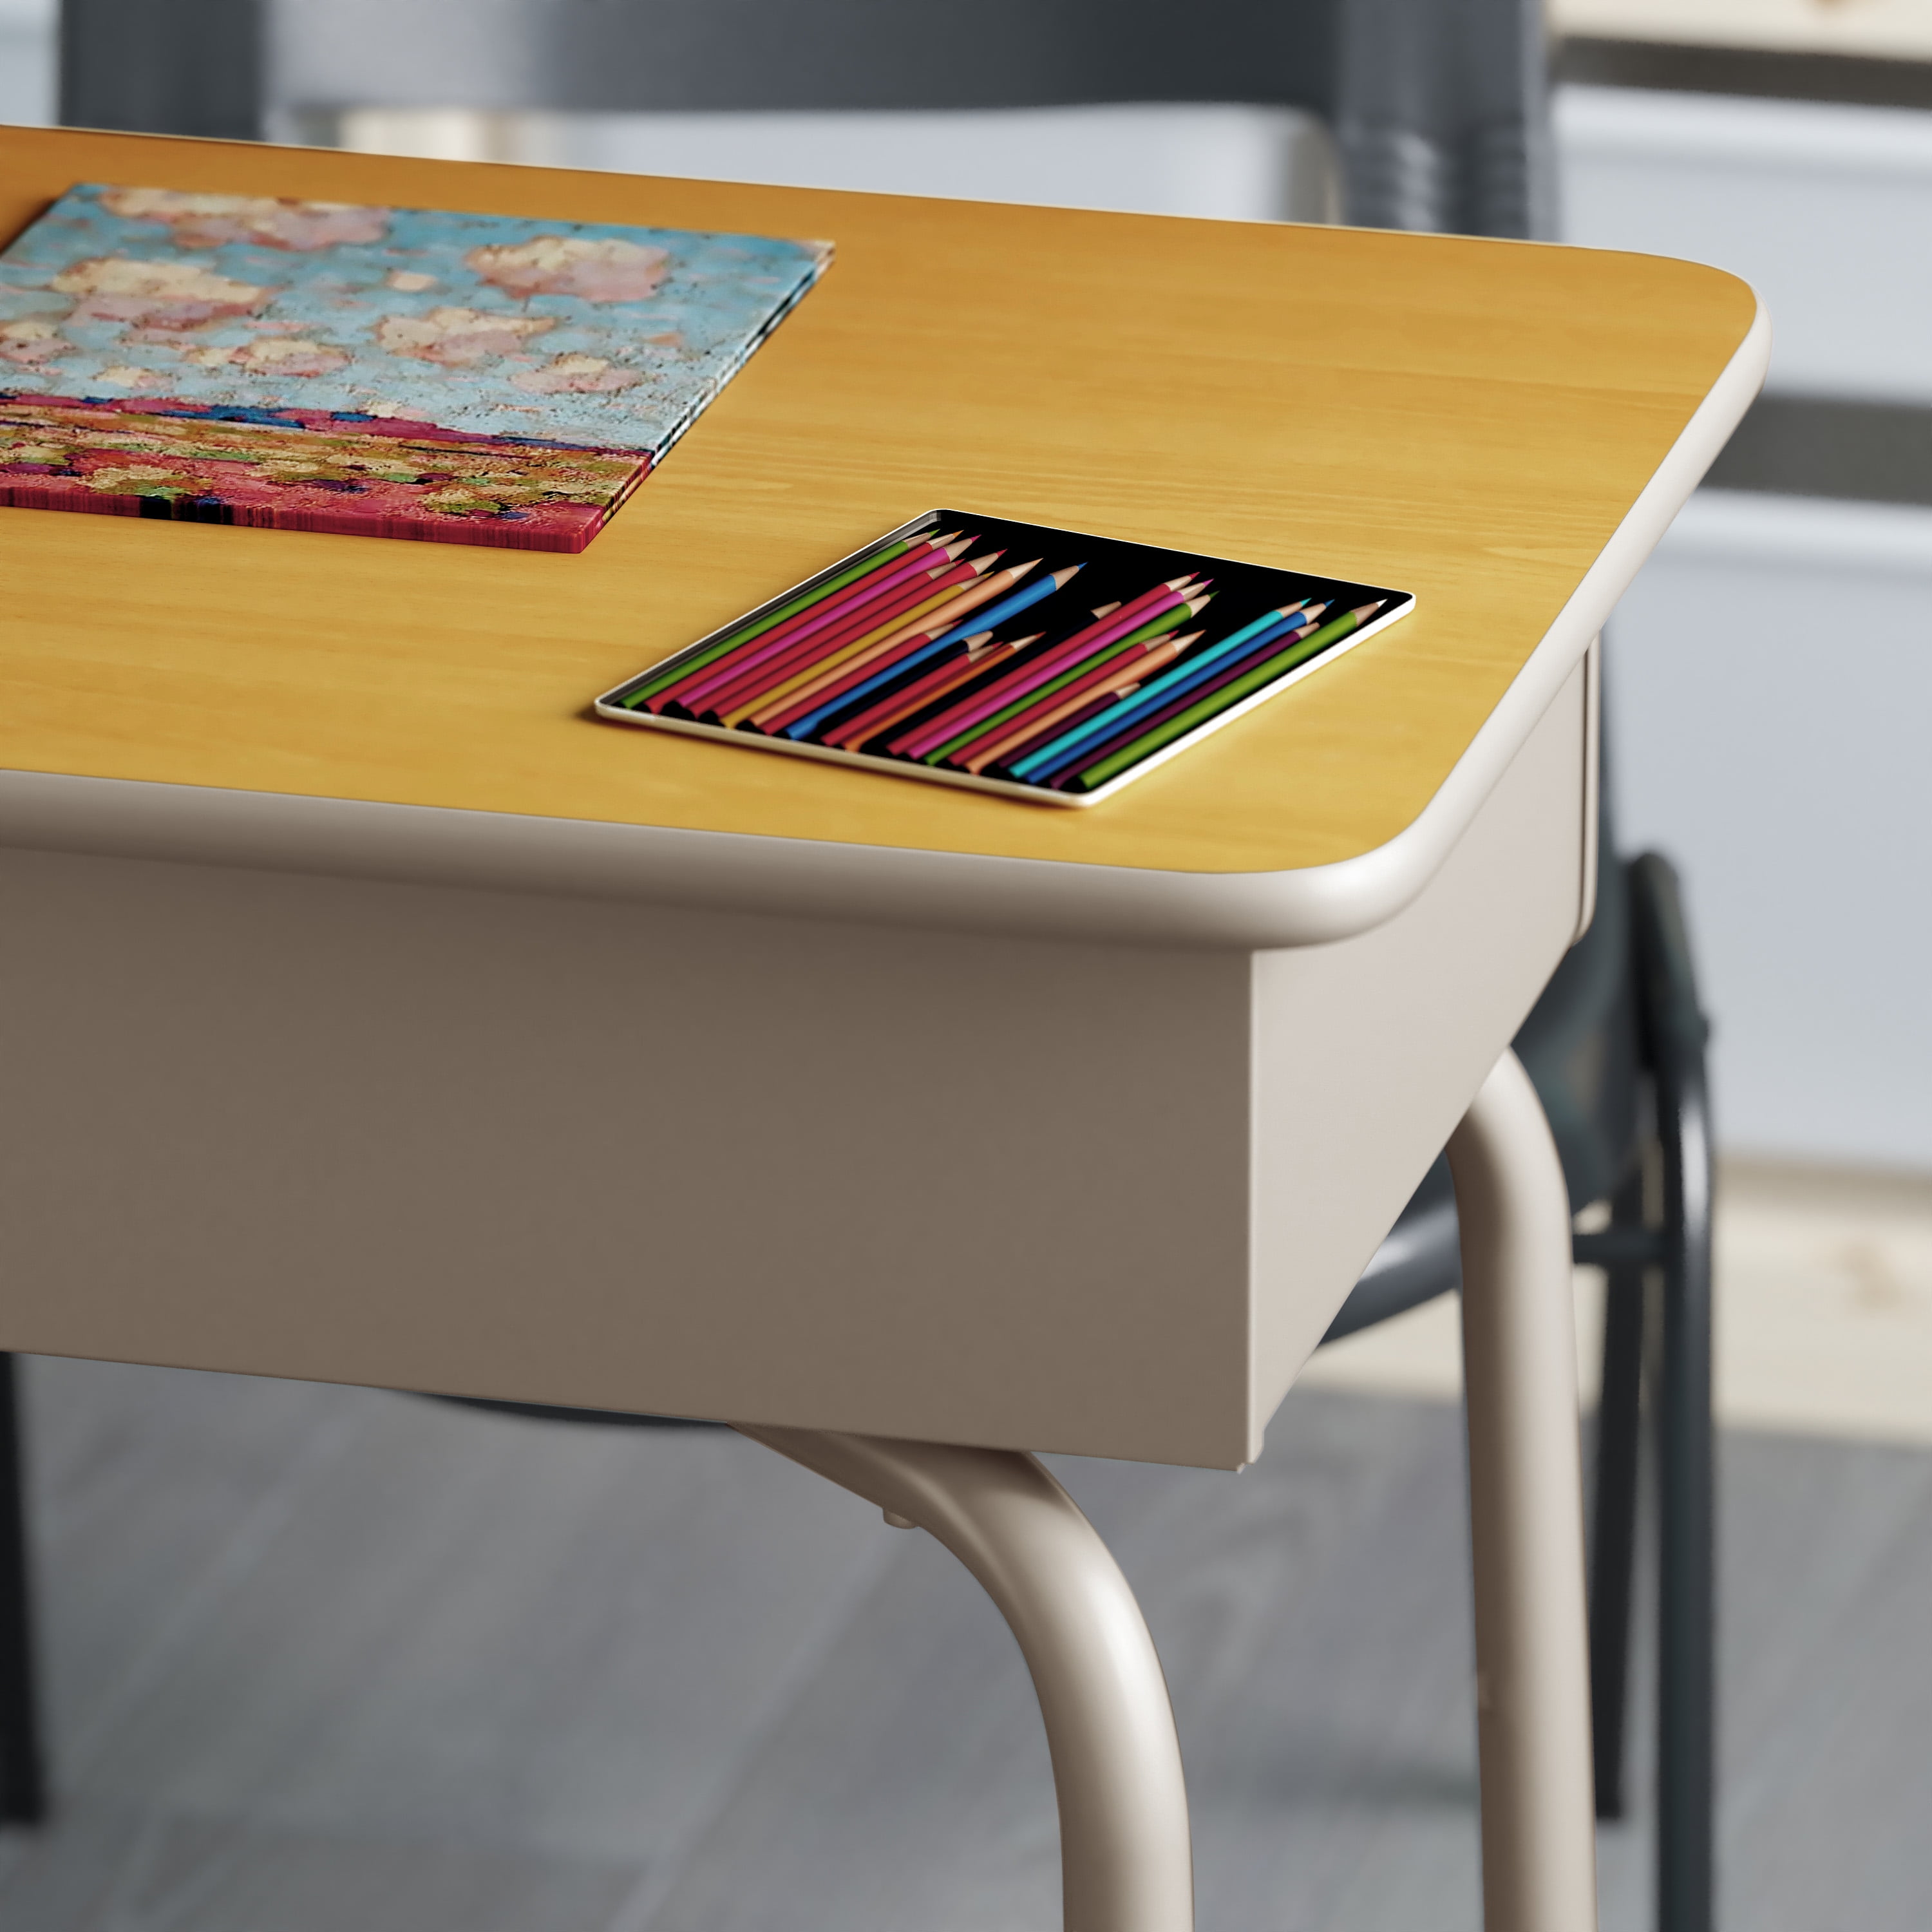 Emma + Oliver Triangular Natural Collaborative Adjustable Student Desk - Home and Classroom